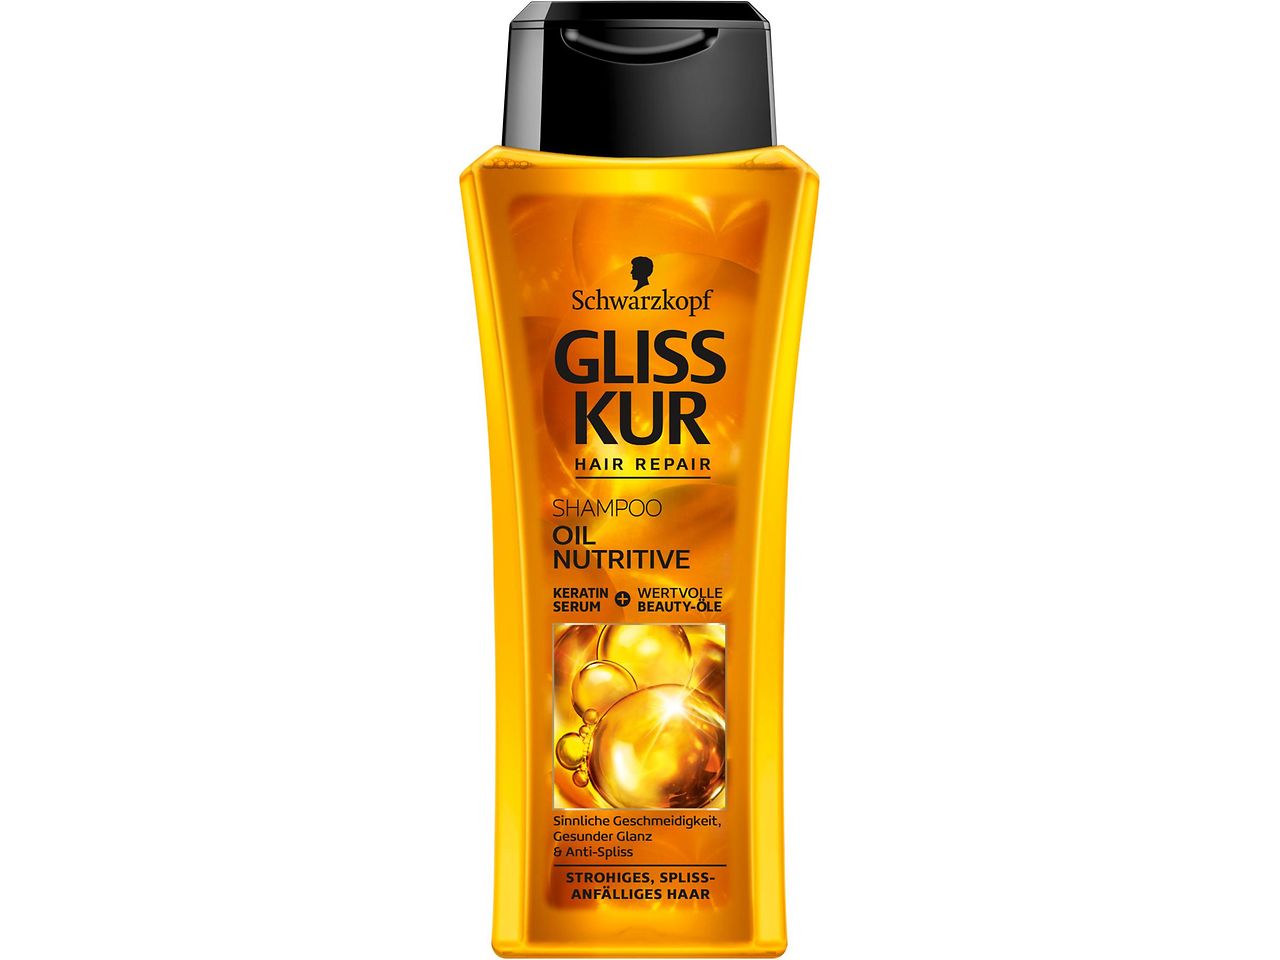 Gliss Kur Shampoo Oil Nutritive